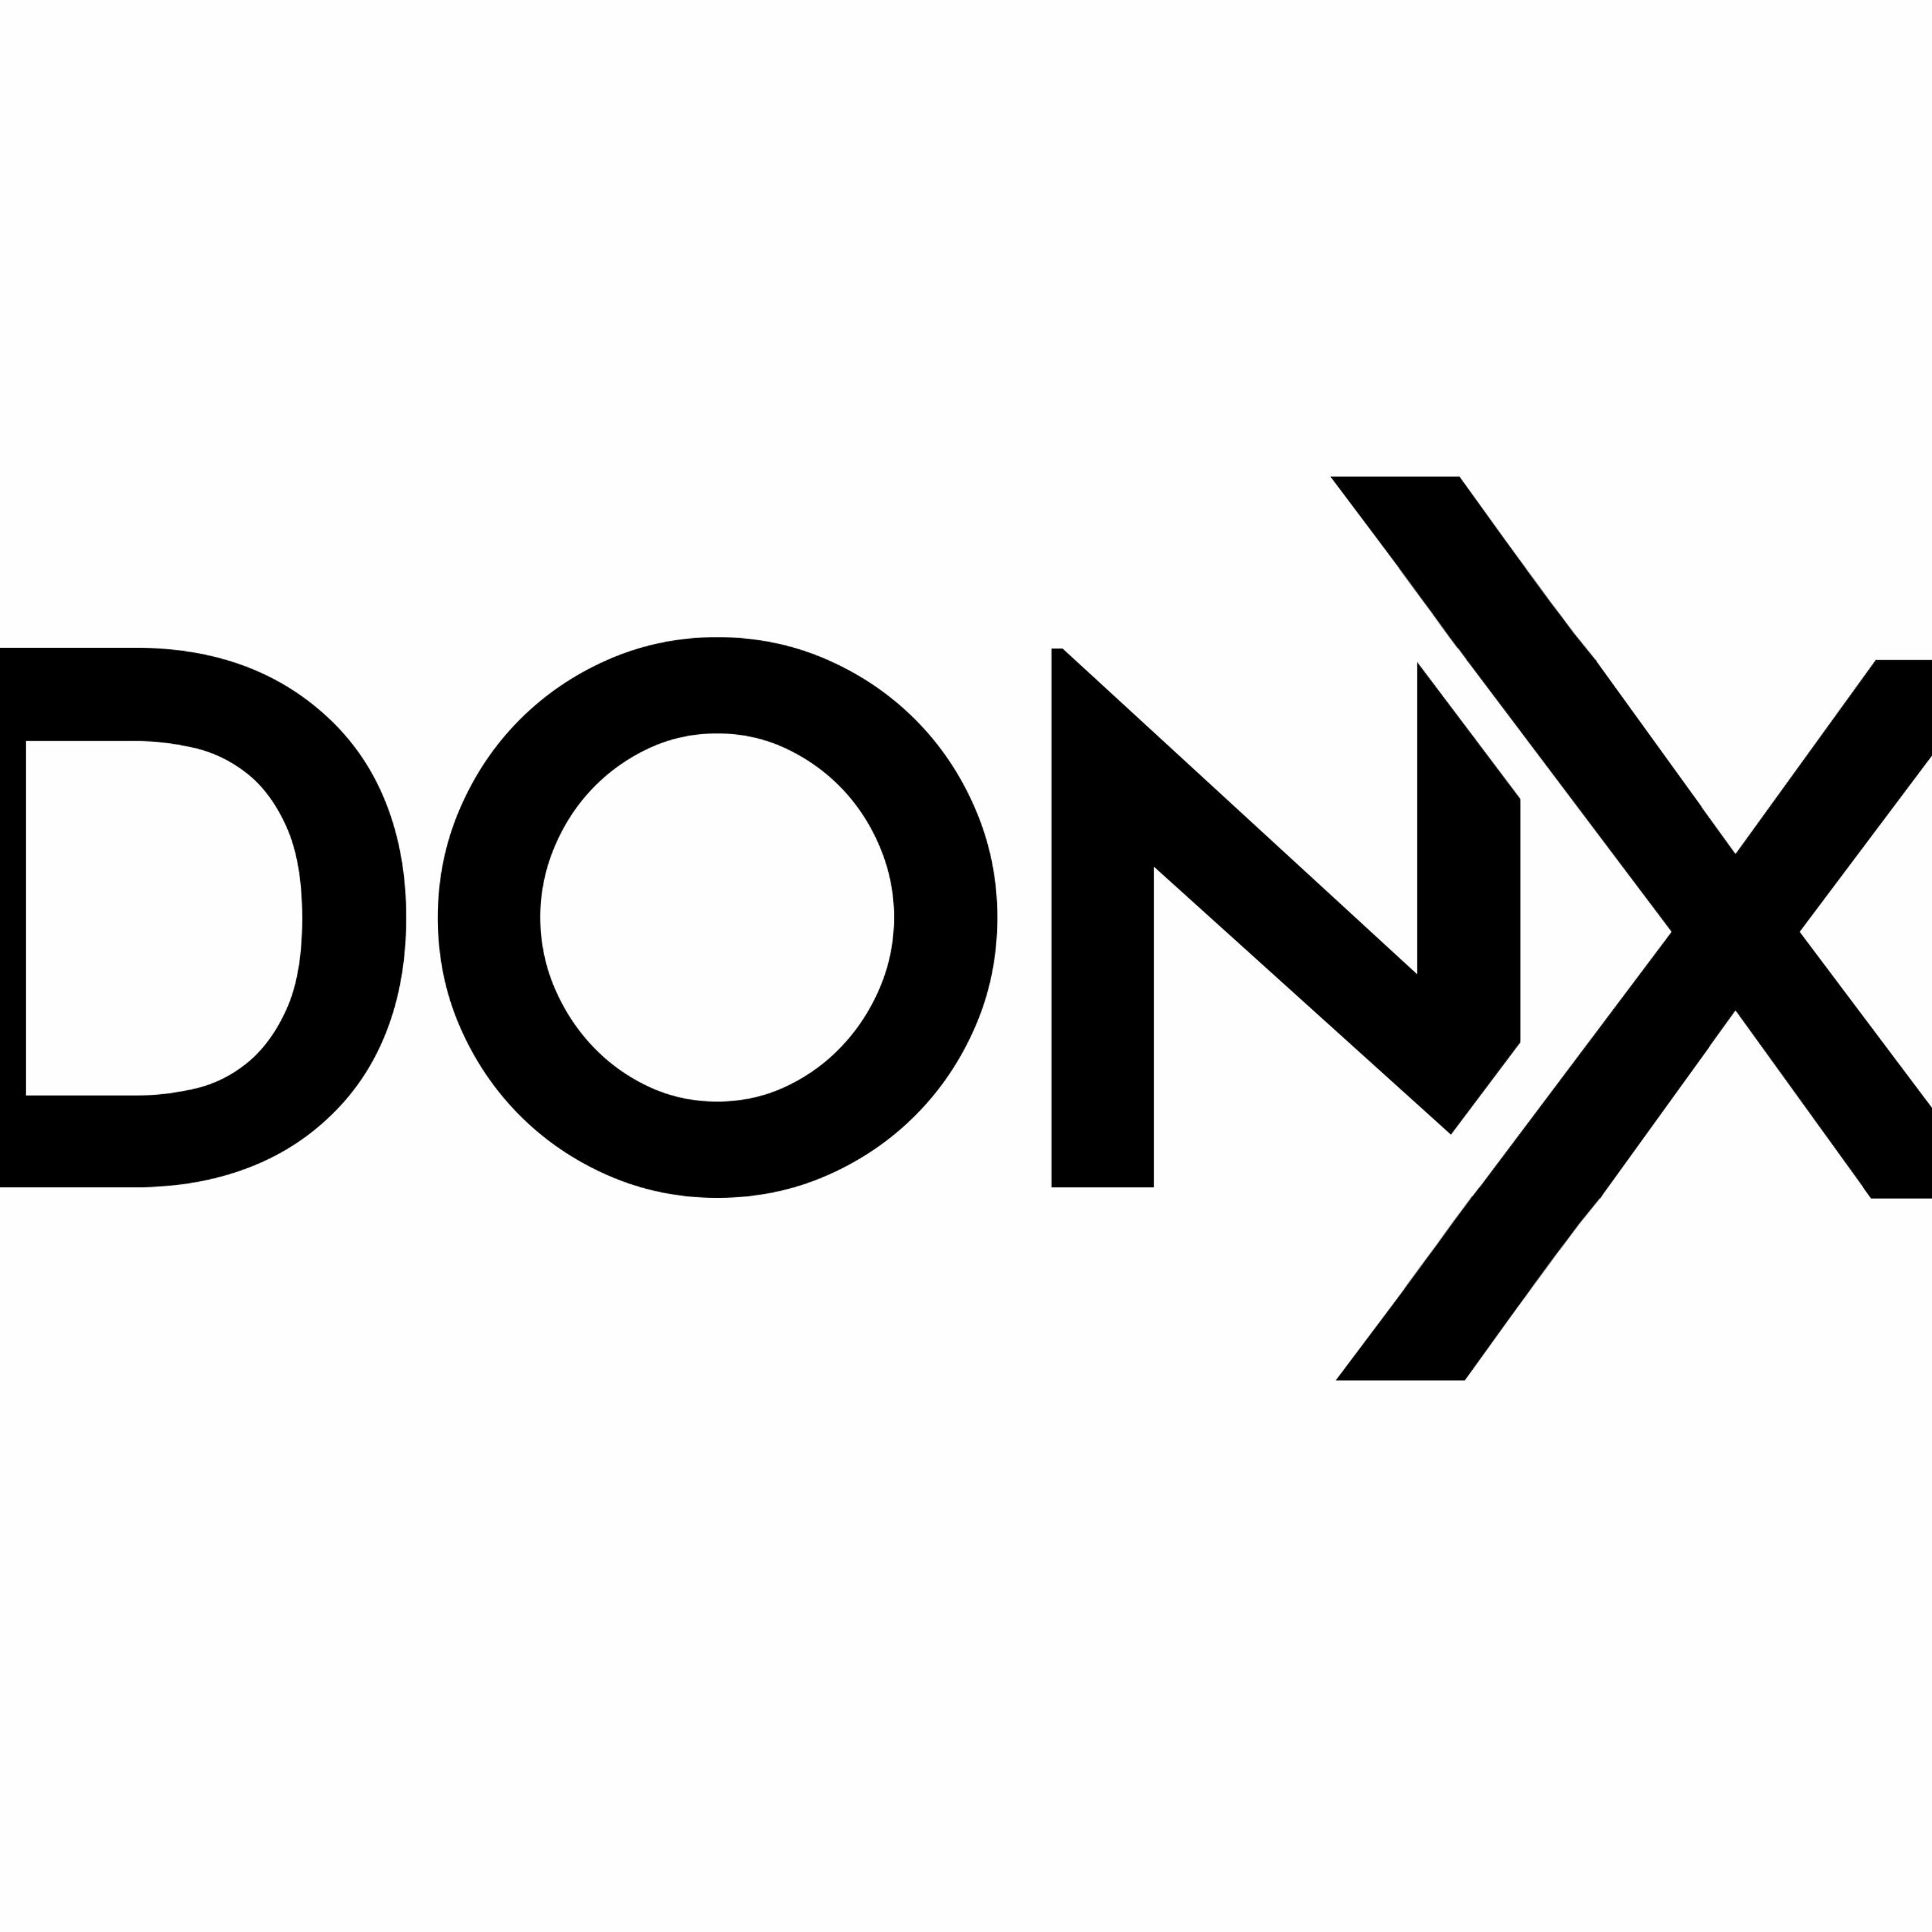 DJ Don X "opening" 2019 Mix